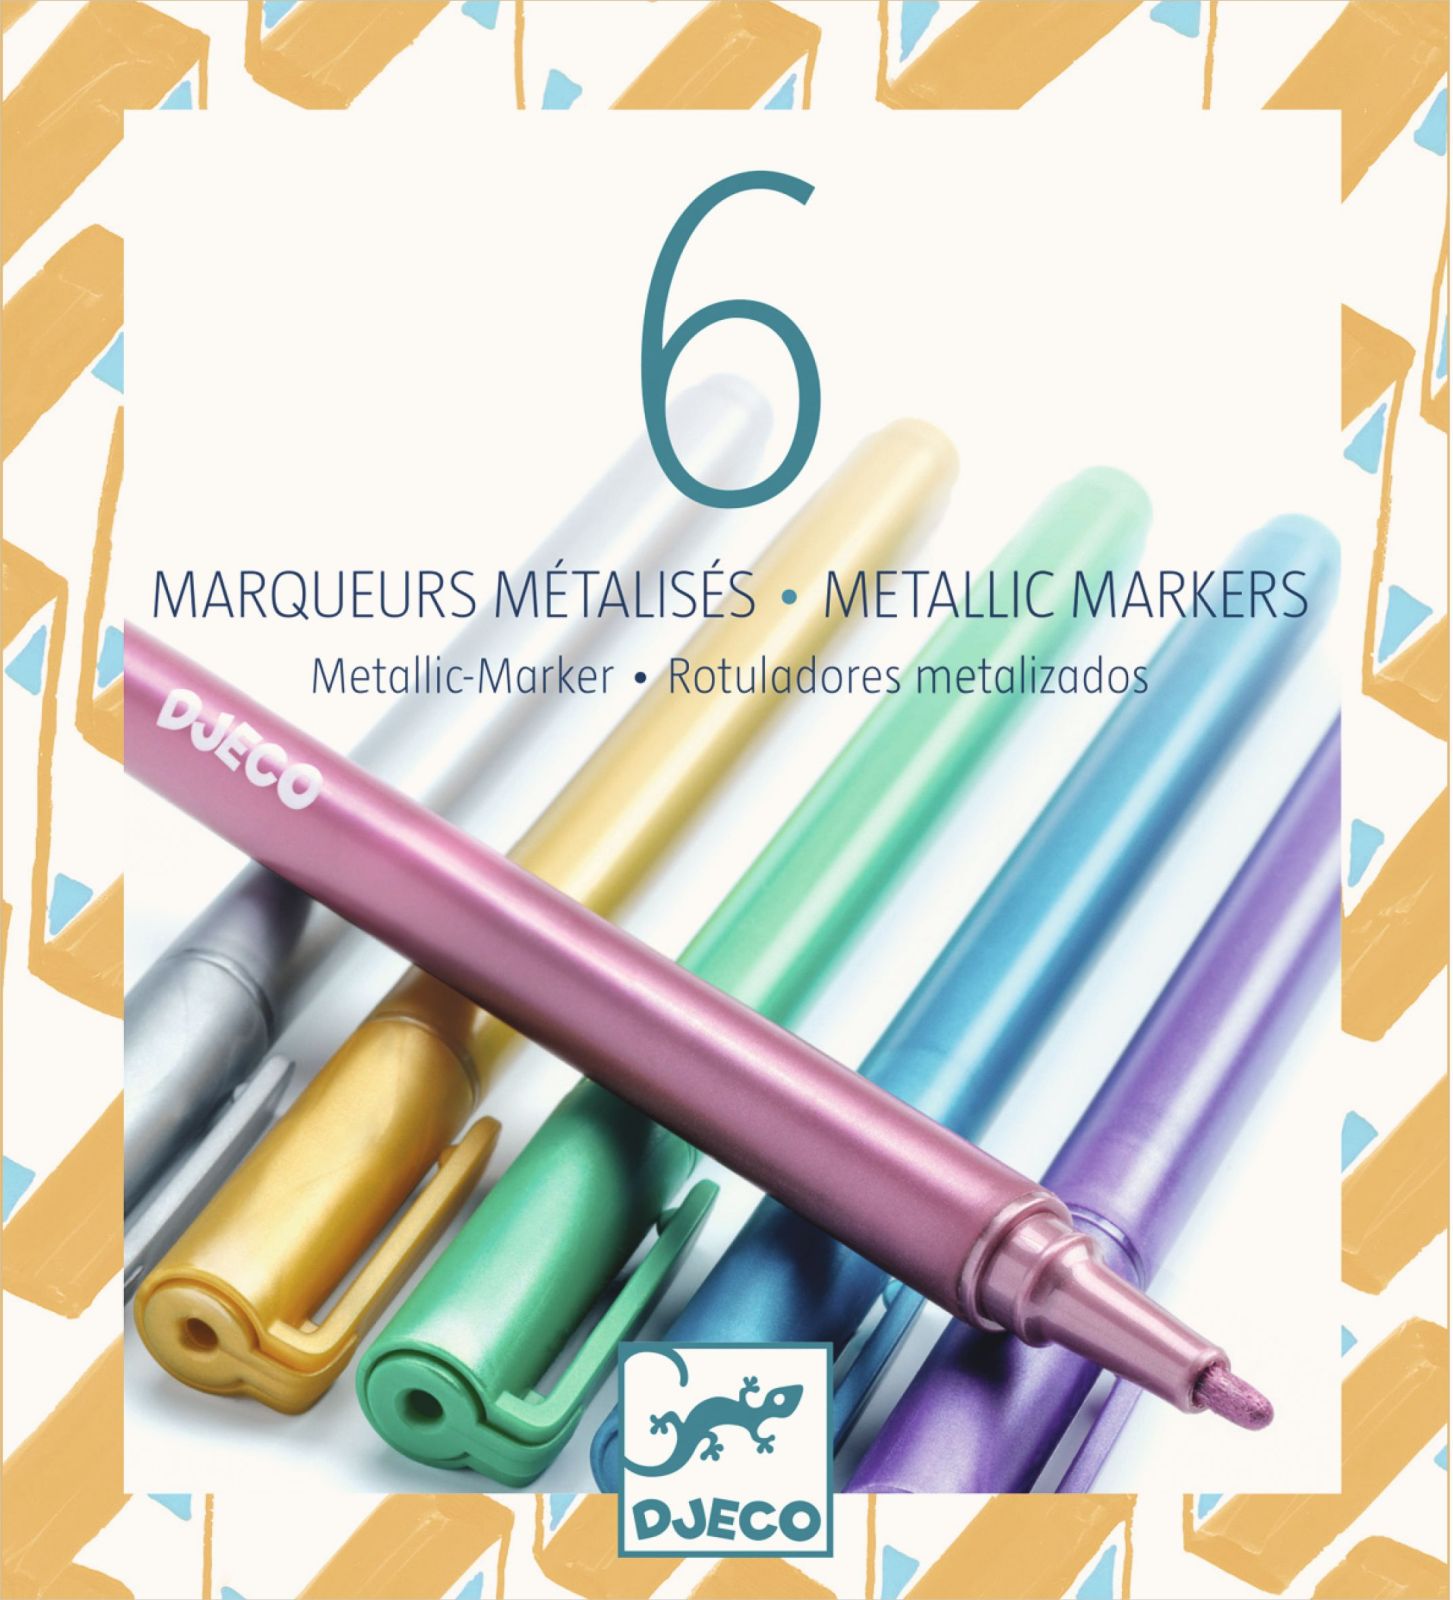 Djeco 6 metallic markers